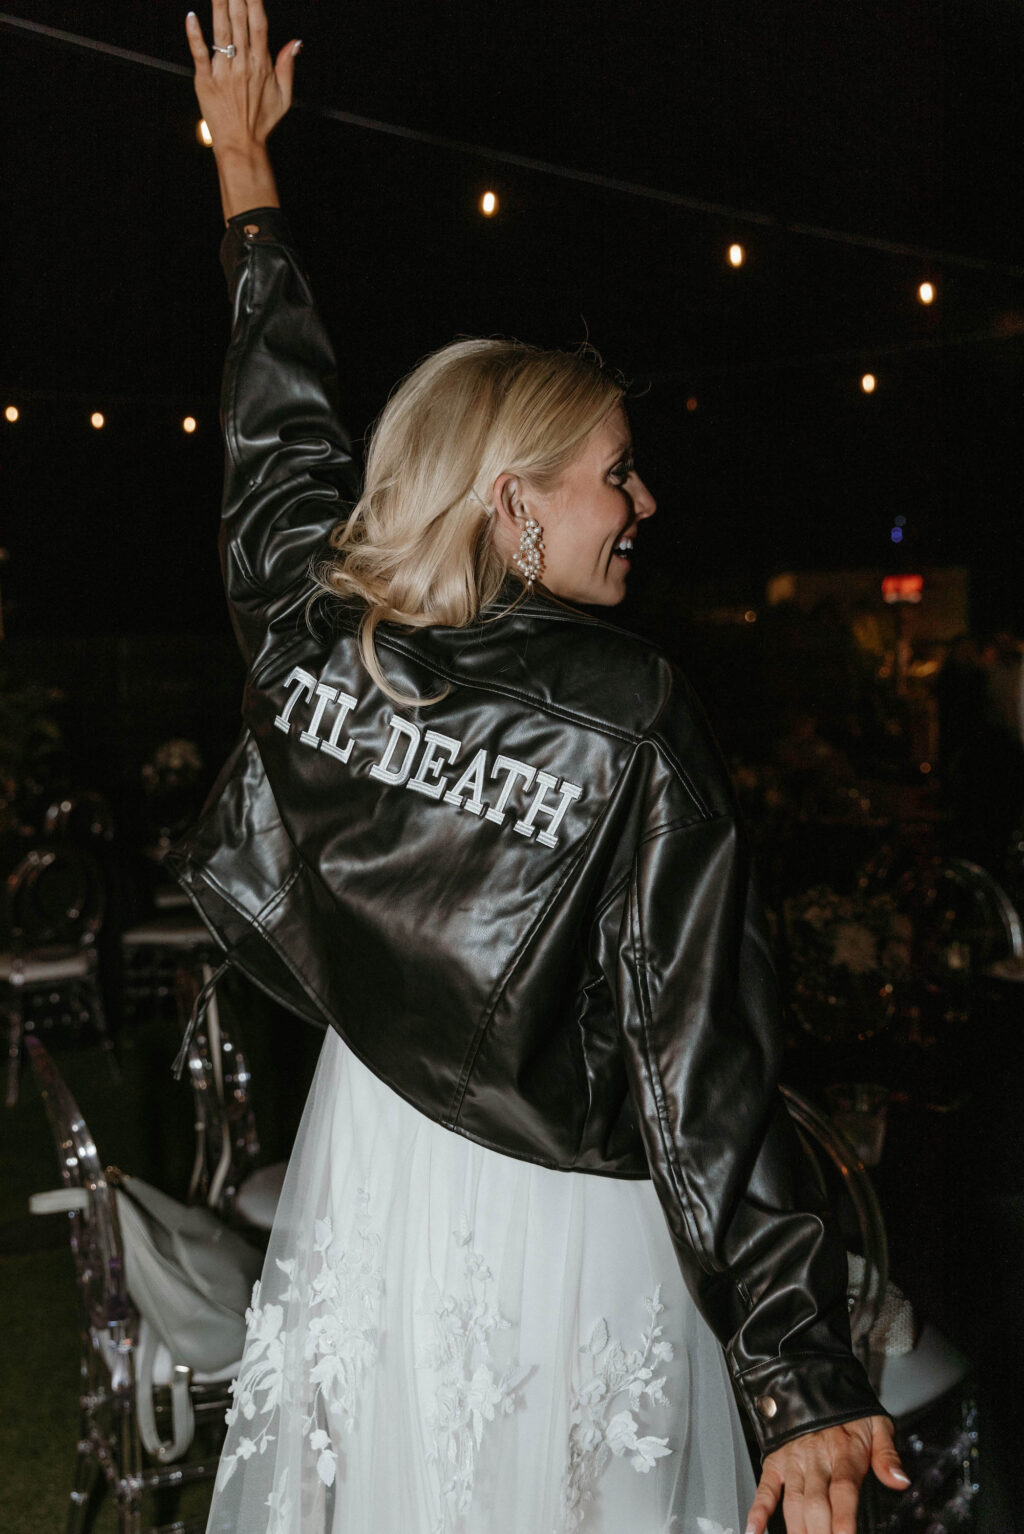 'Til Death Bridal Leather Jacket After Party Reception Look Ideas